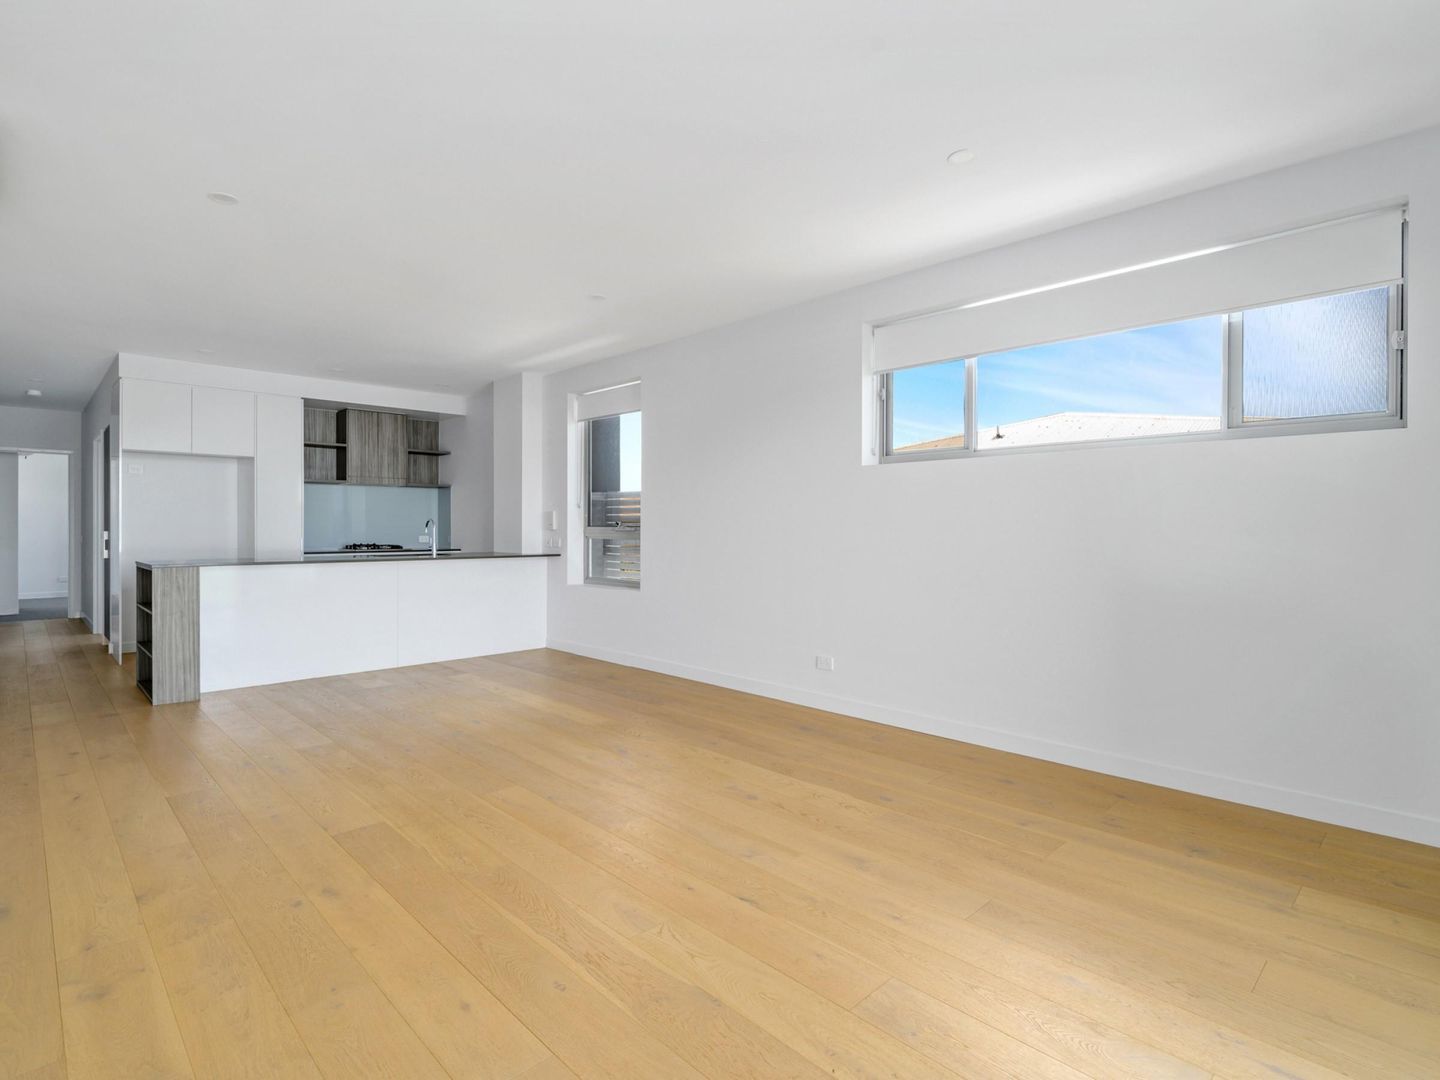 2 bedrooms Apartment / Unit / Flat in 14/26 Buxton Street ASCOT QLD, 4007